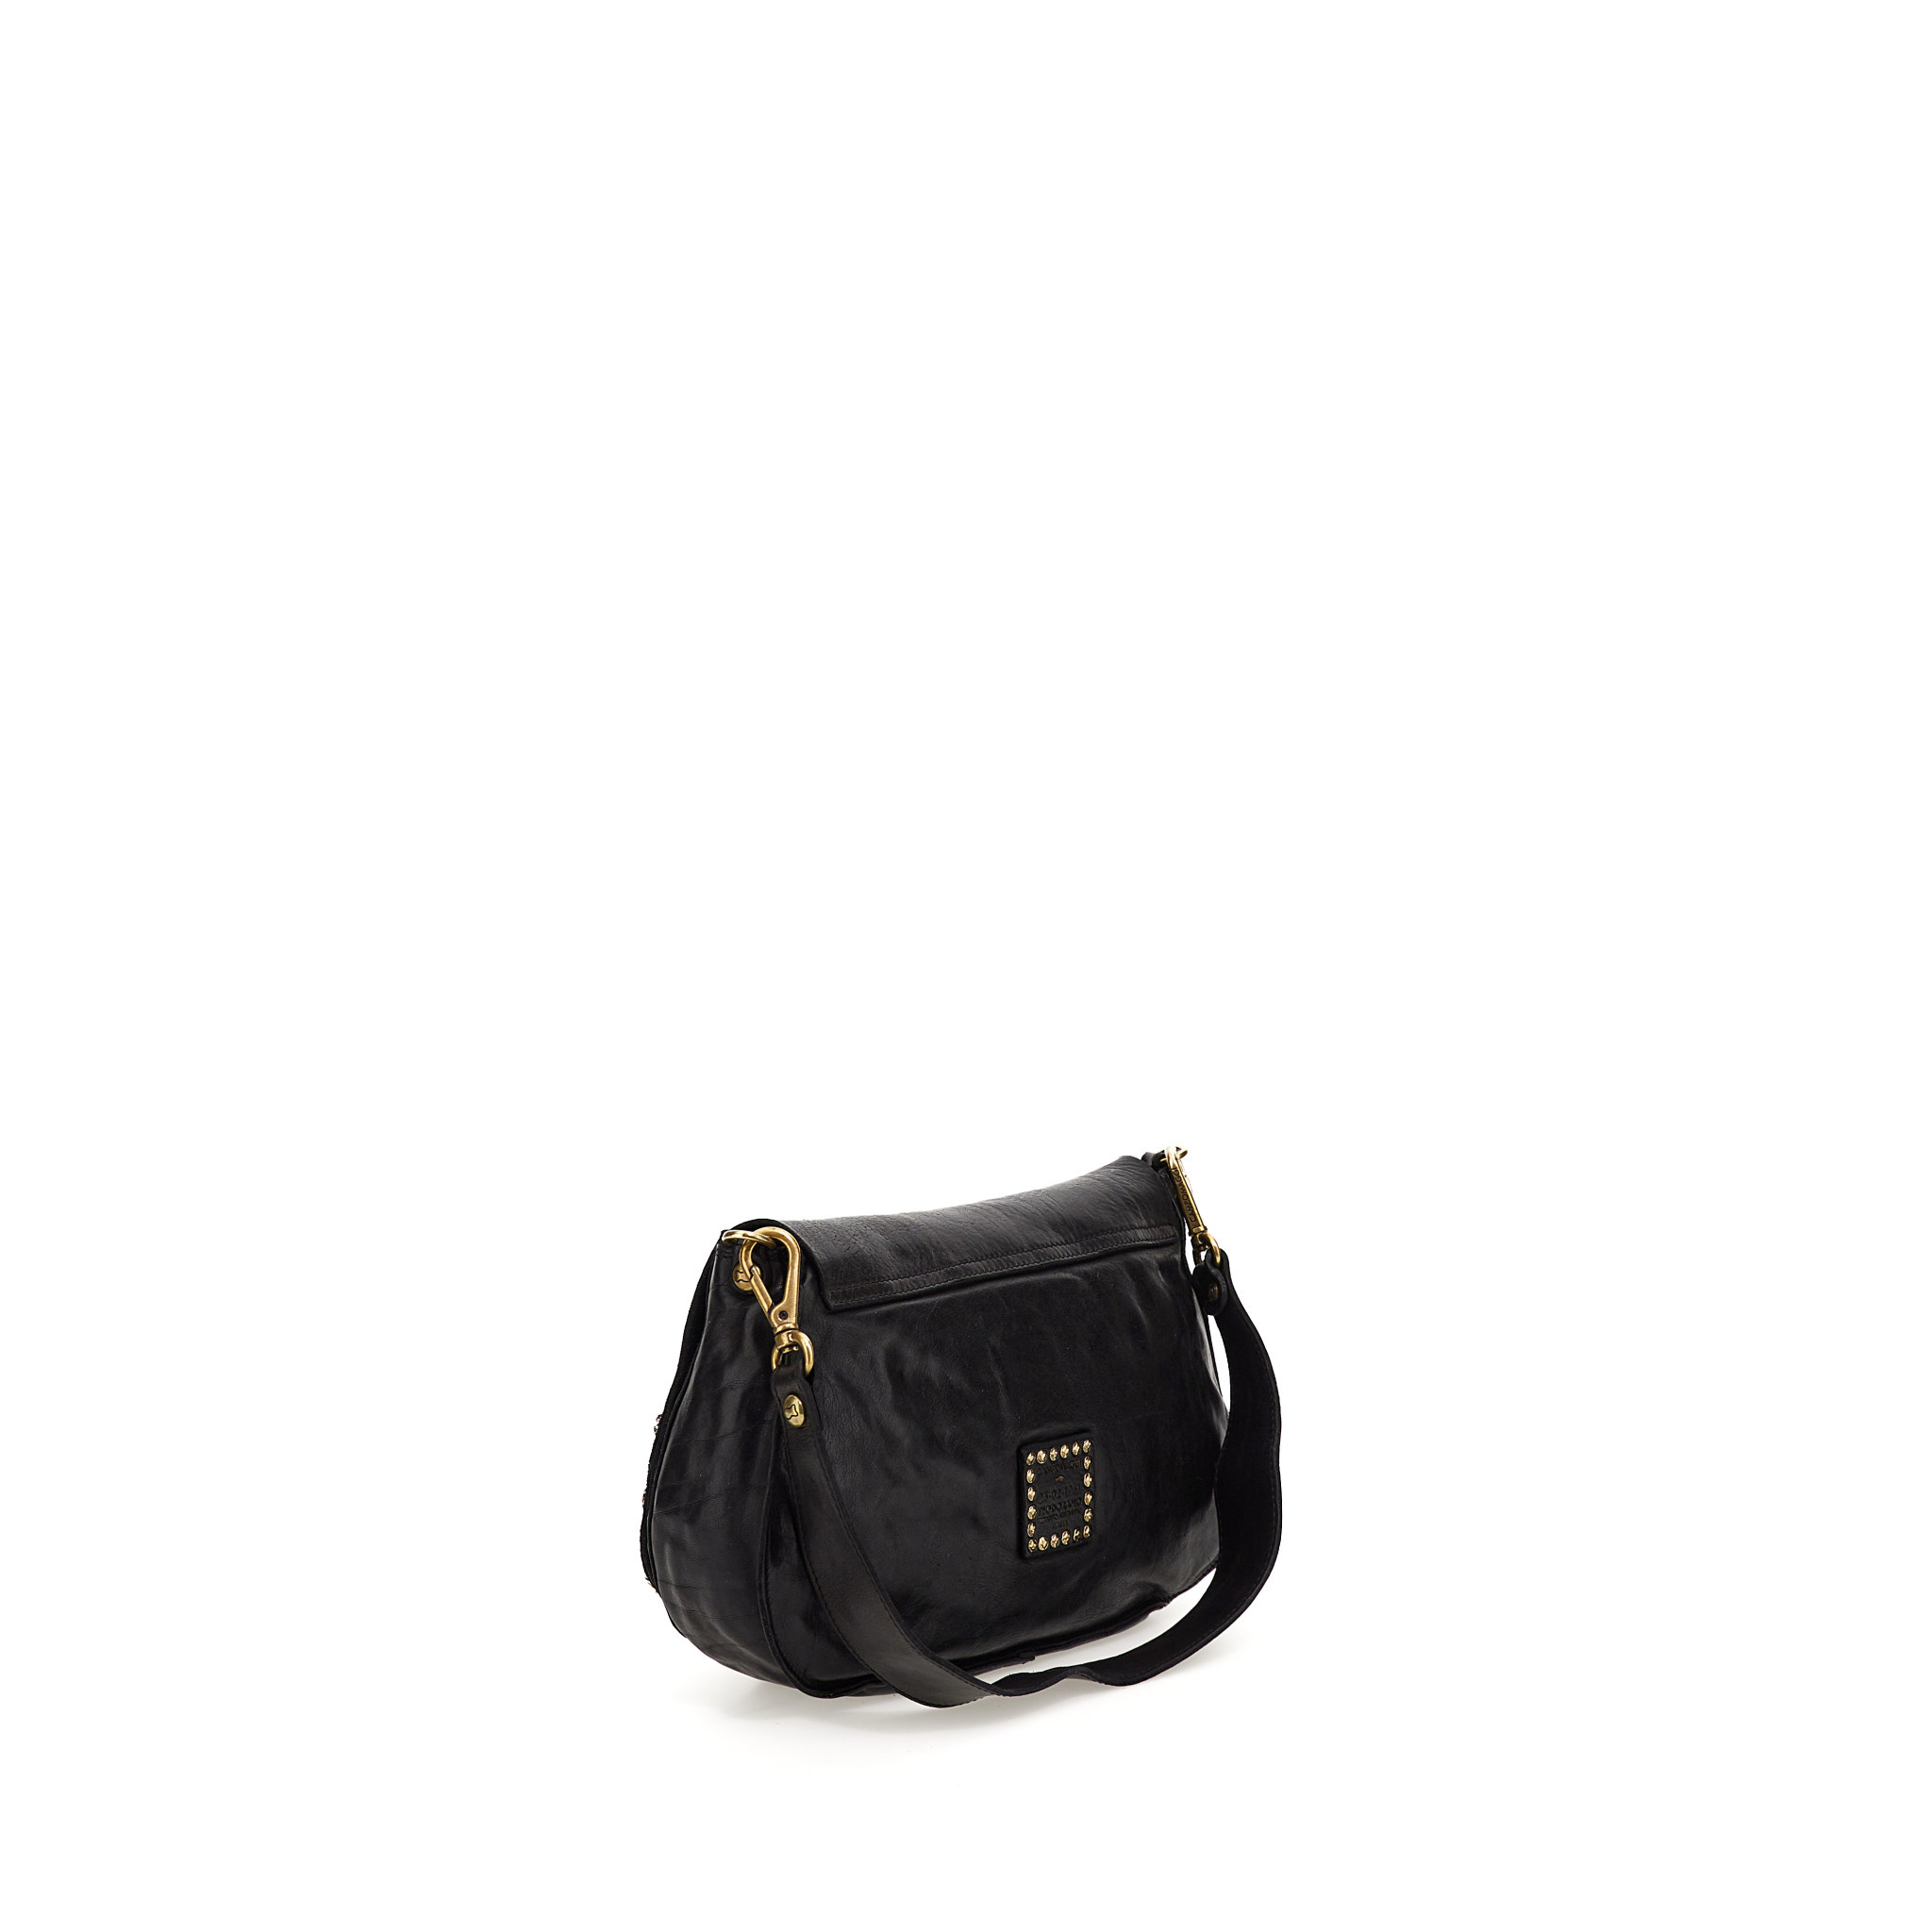 Campomaggi Shoulder bag. Leather w Flap + Bella di Notte Studs. P/D Black.